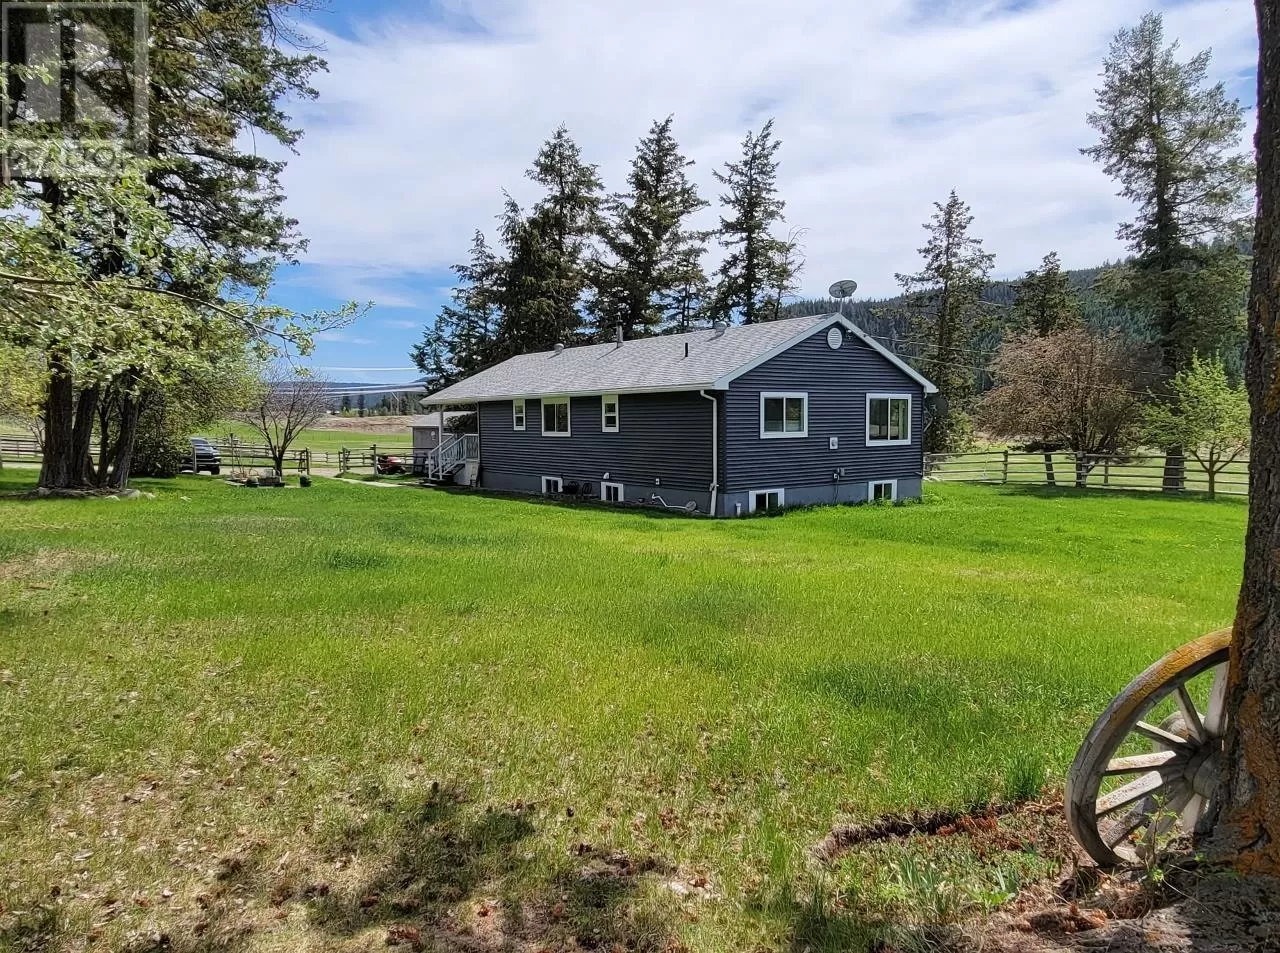 House for rent: 855 Vanderburgh Road, Williams Lake, British Columbia V2G 4W4